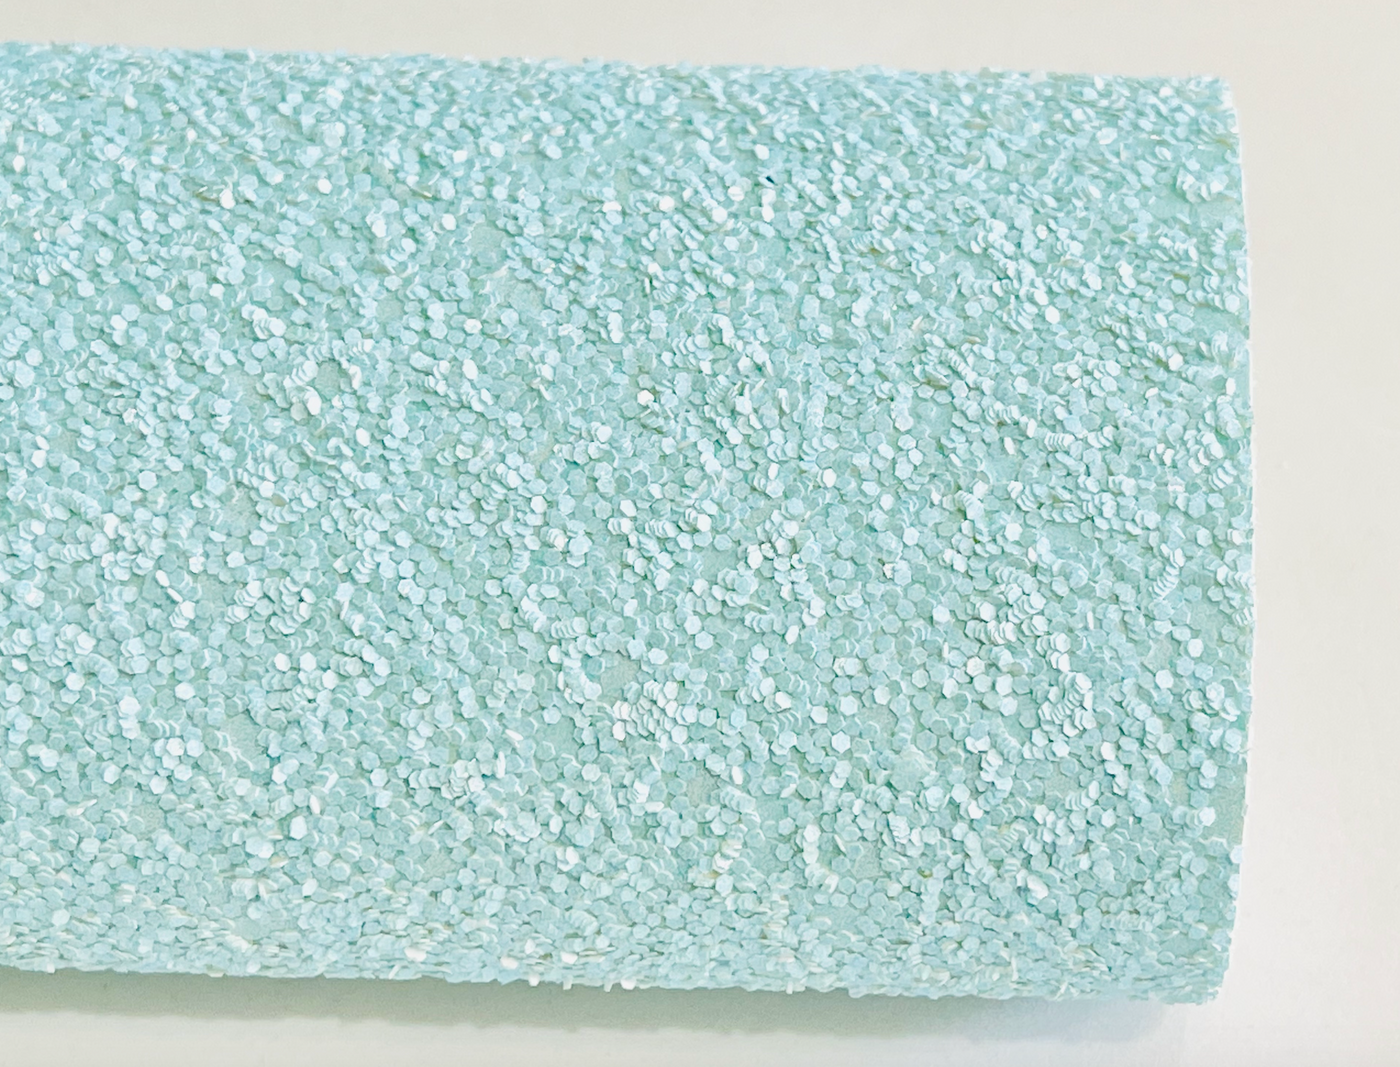 3 Sheet Bundle - Blue Chunky Glitter Fabric Sheets